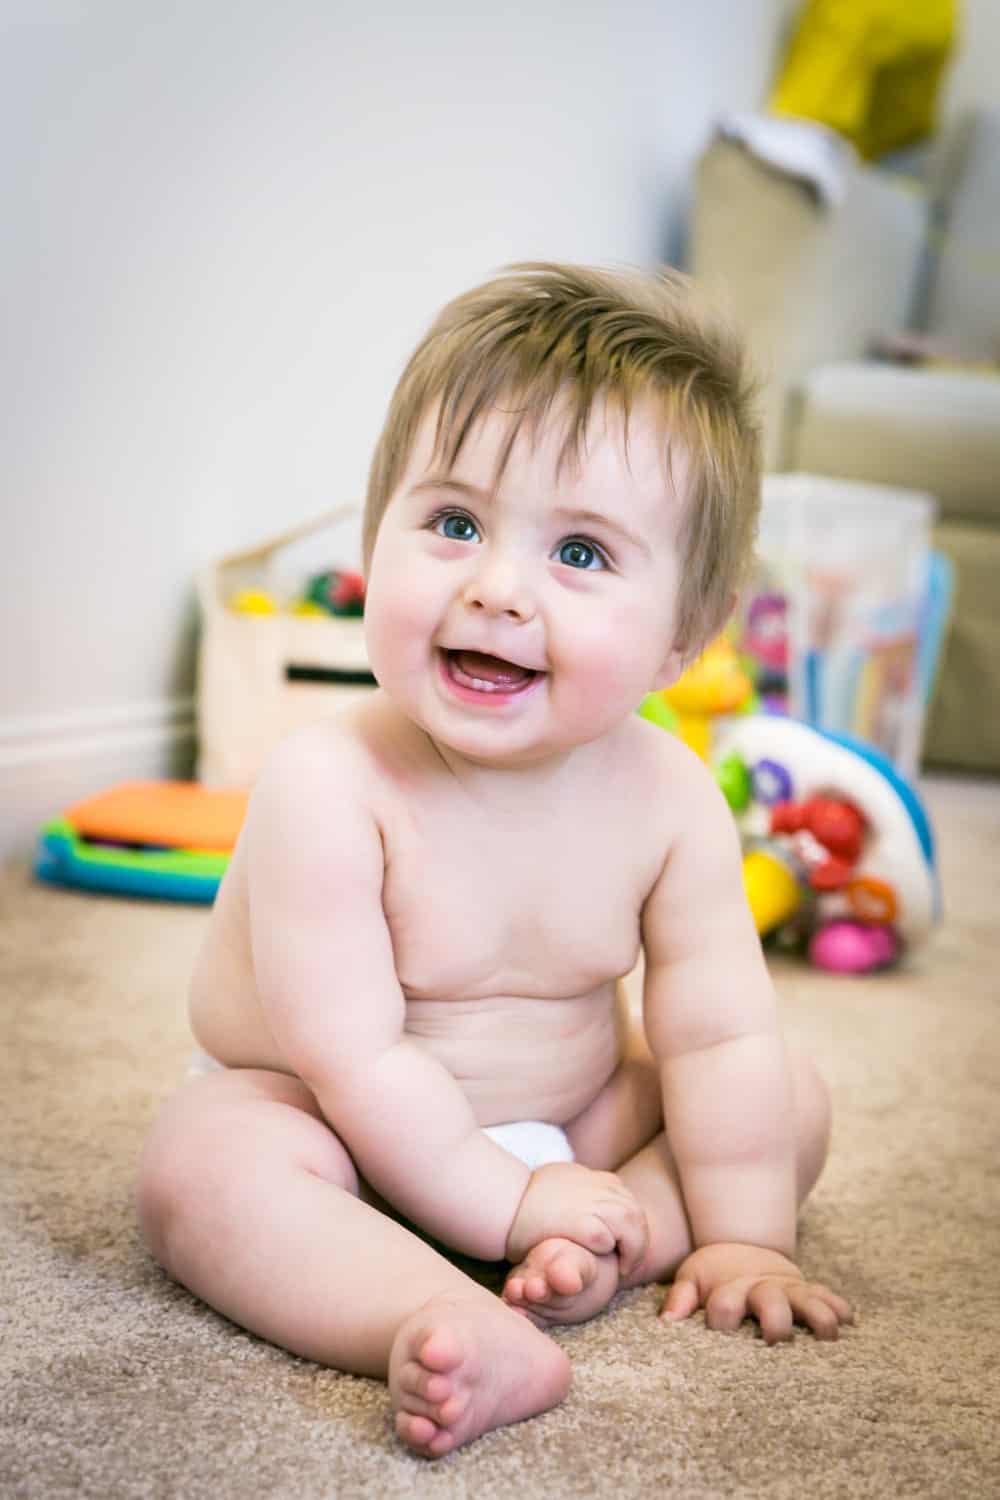 Baby boy wearing diaper on carpet